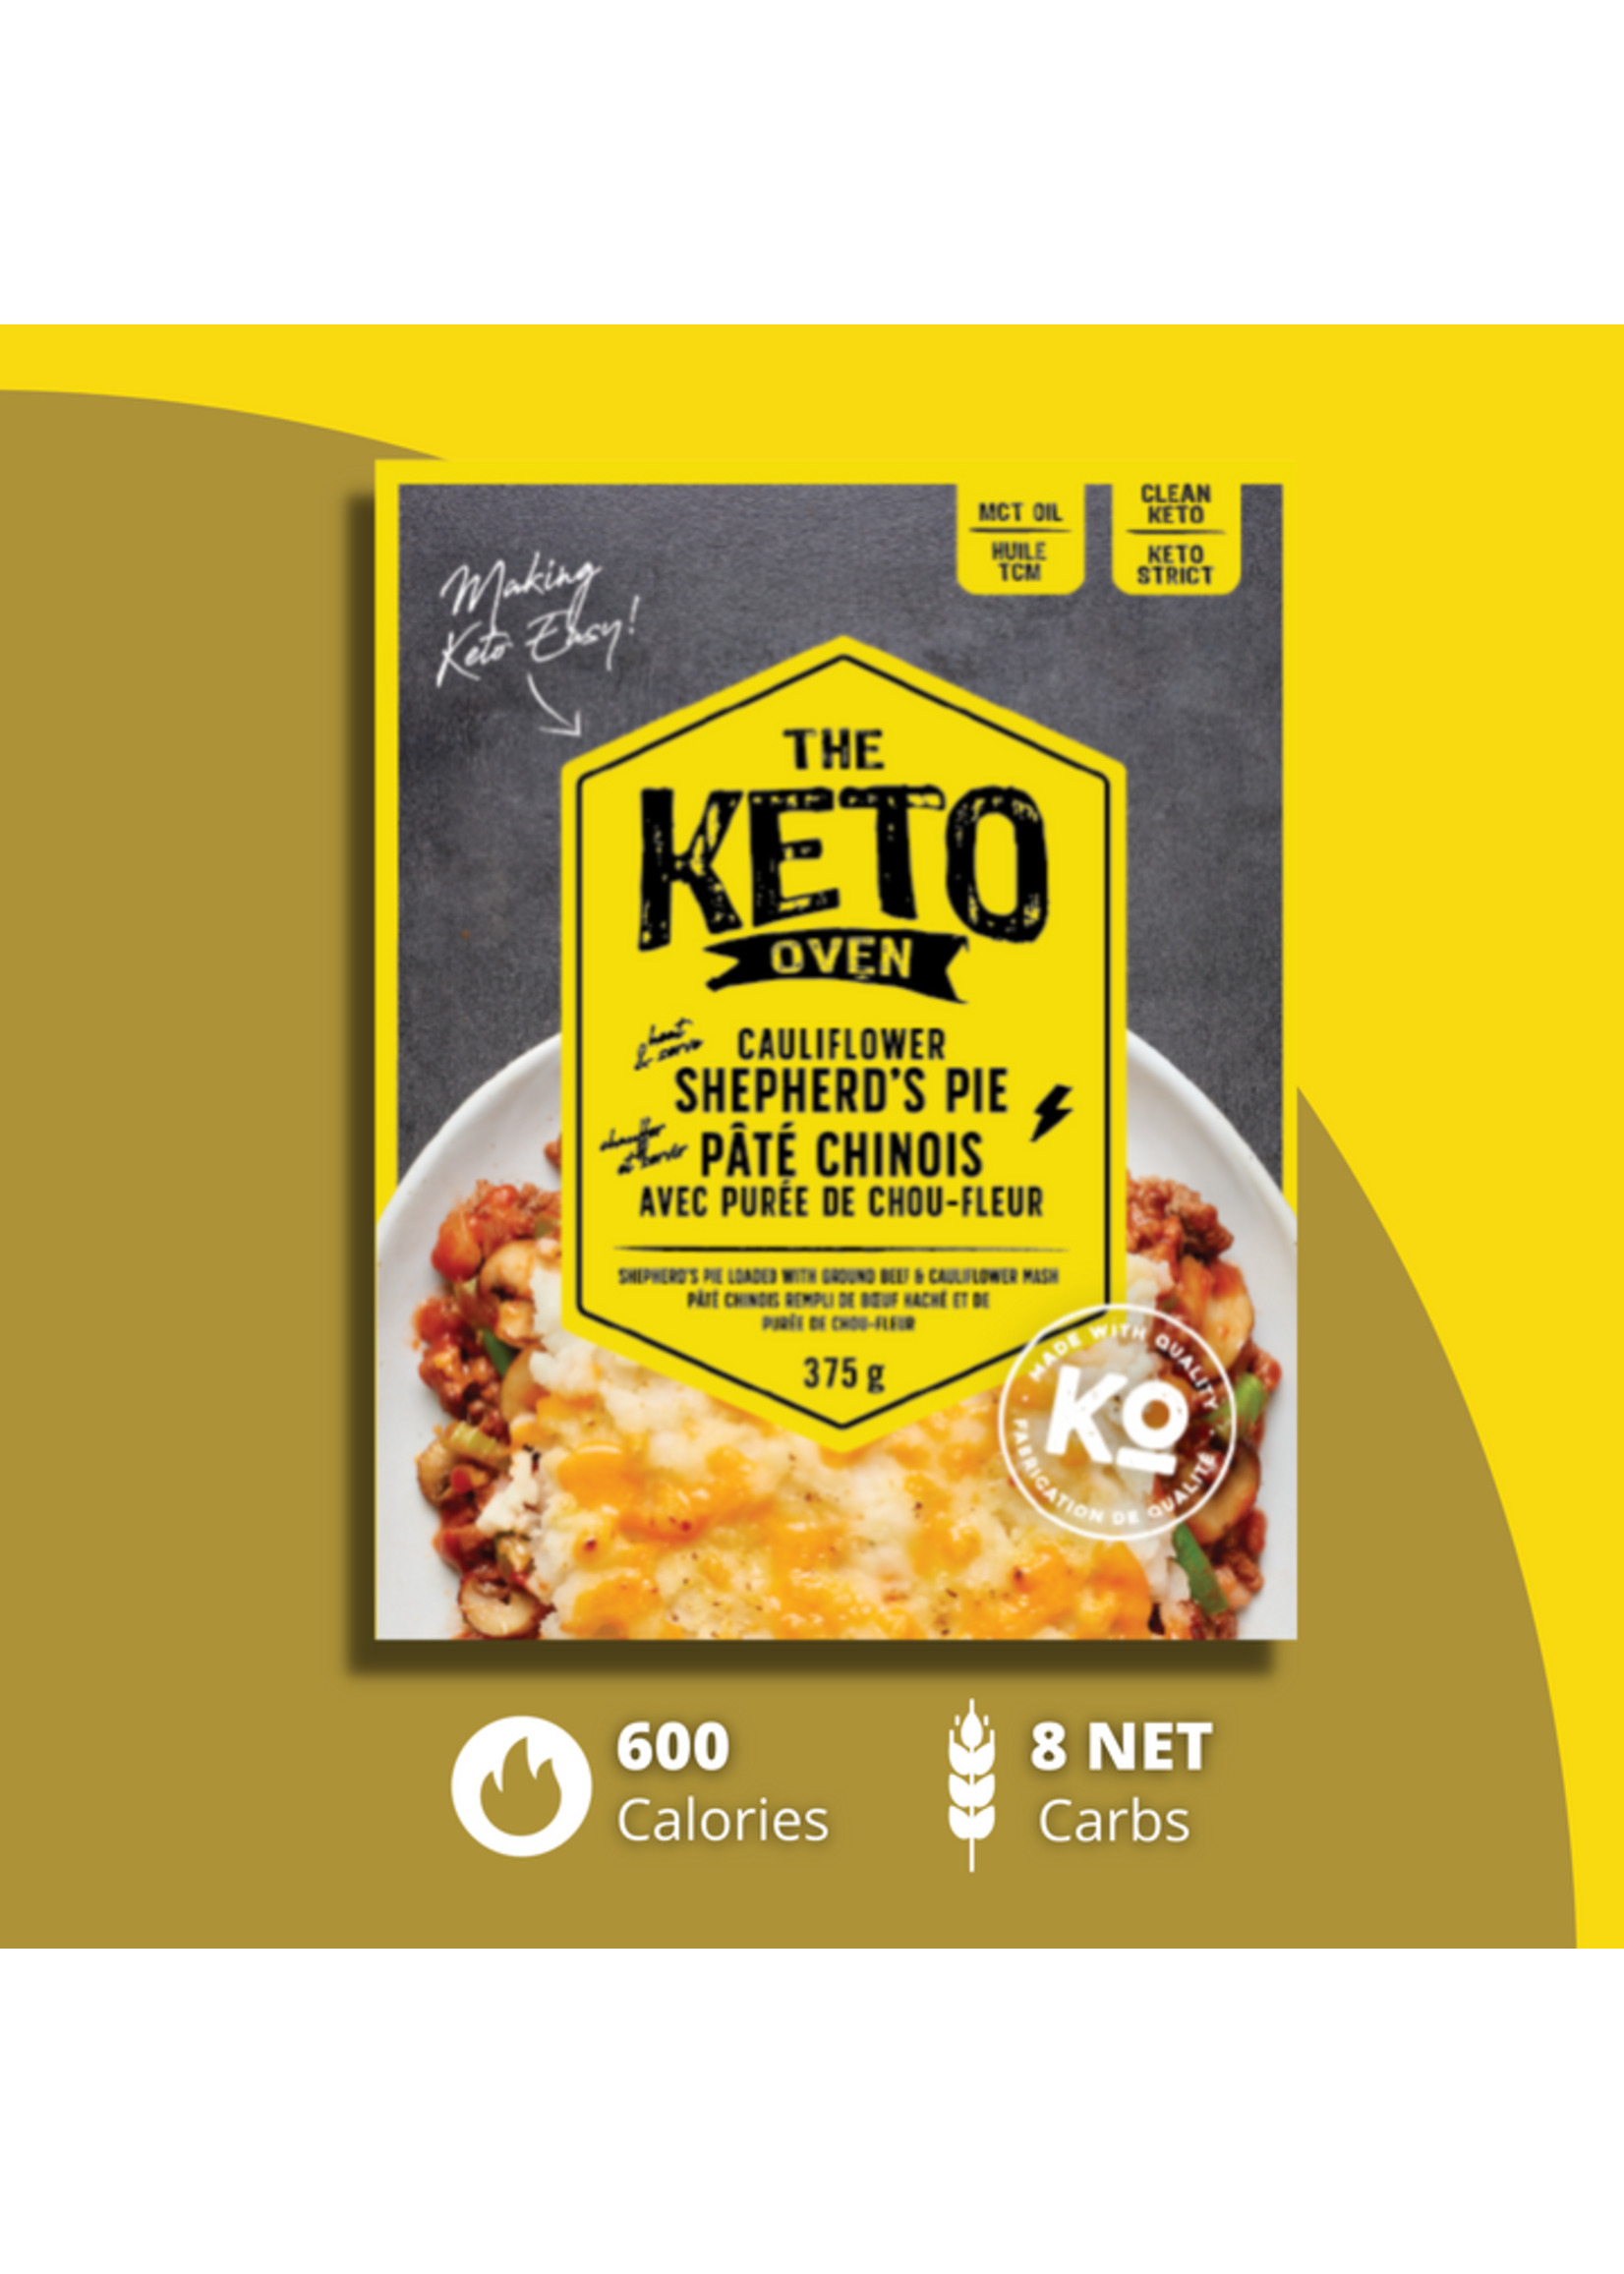 The Keto Oven The Keto Oven - Keto Meals, Shepards Pie